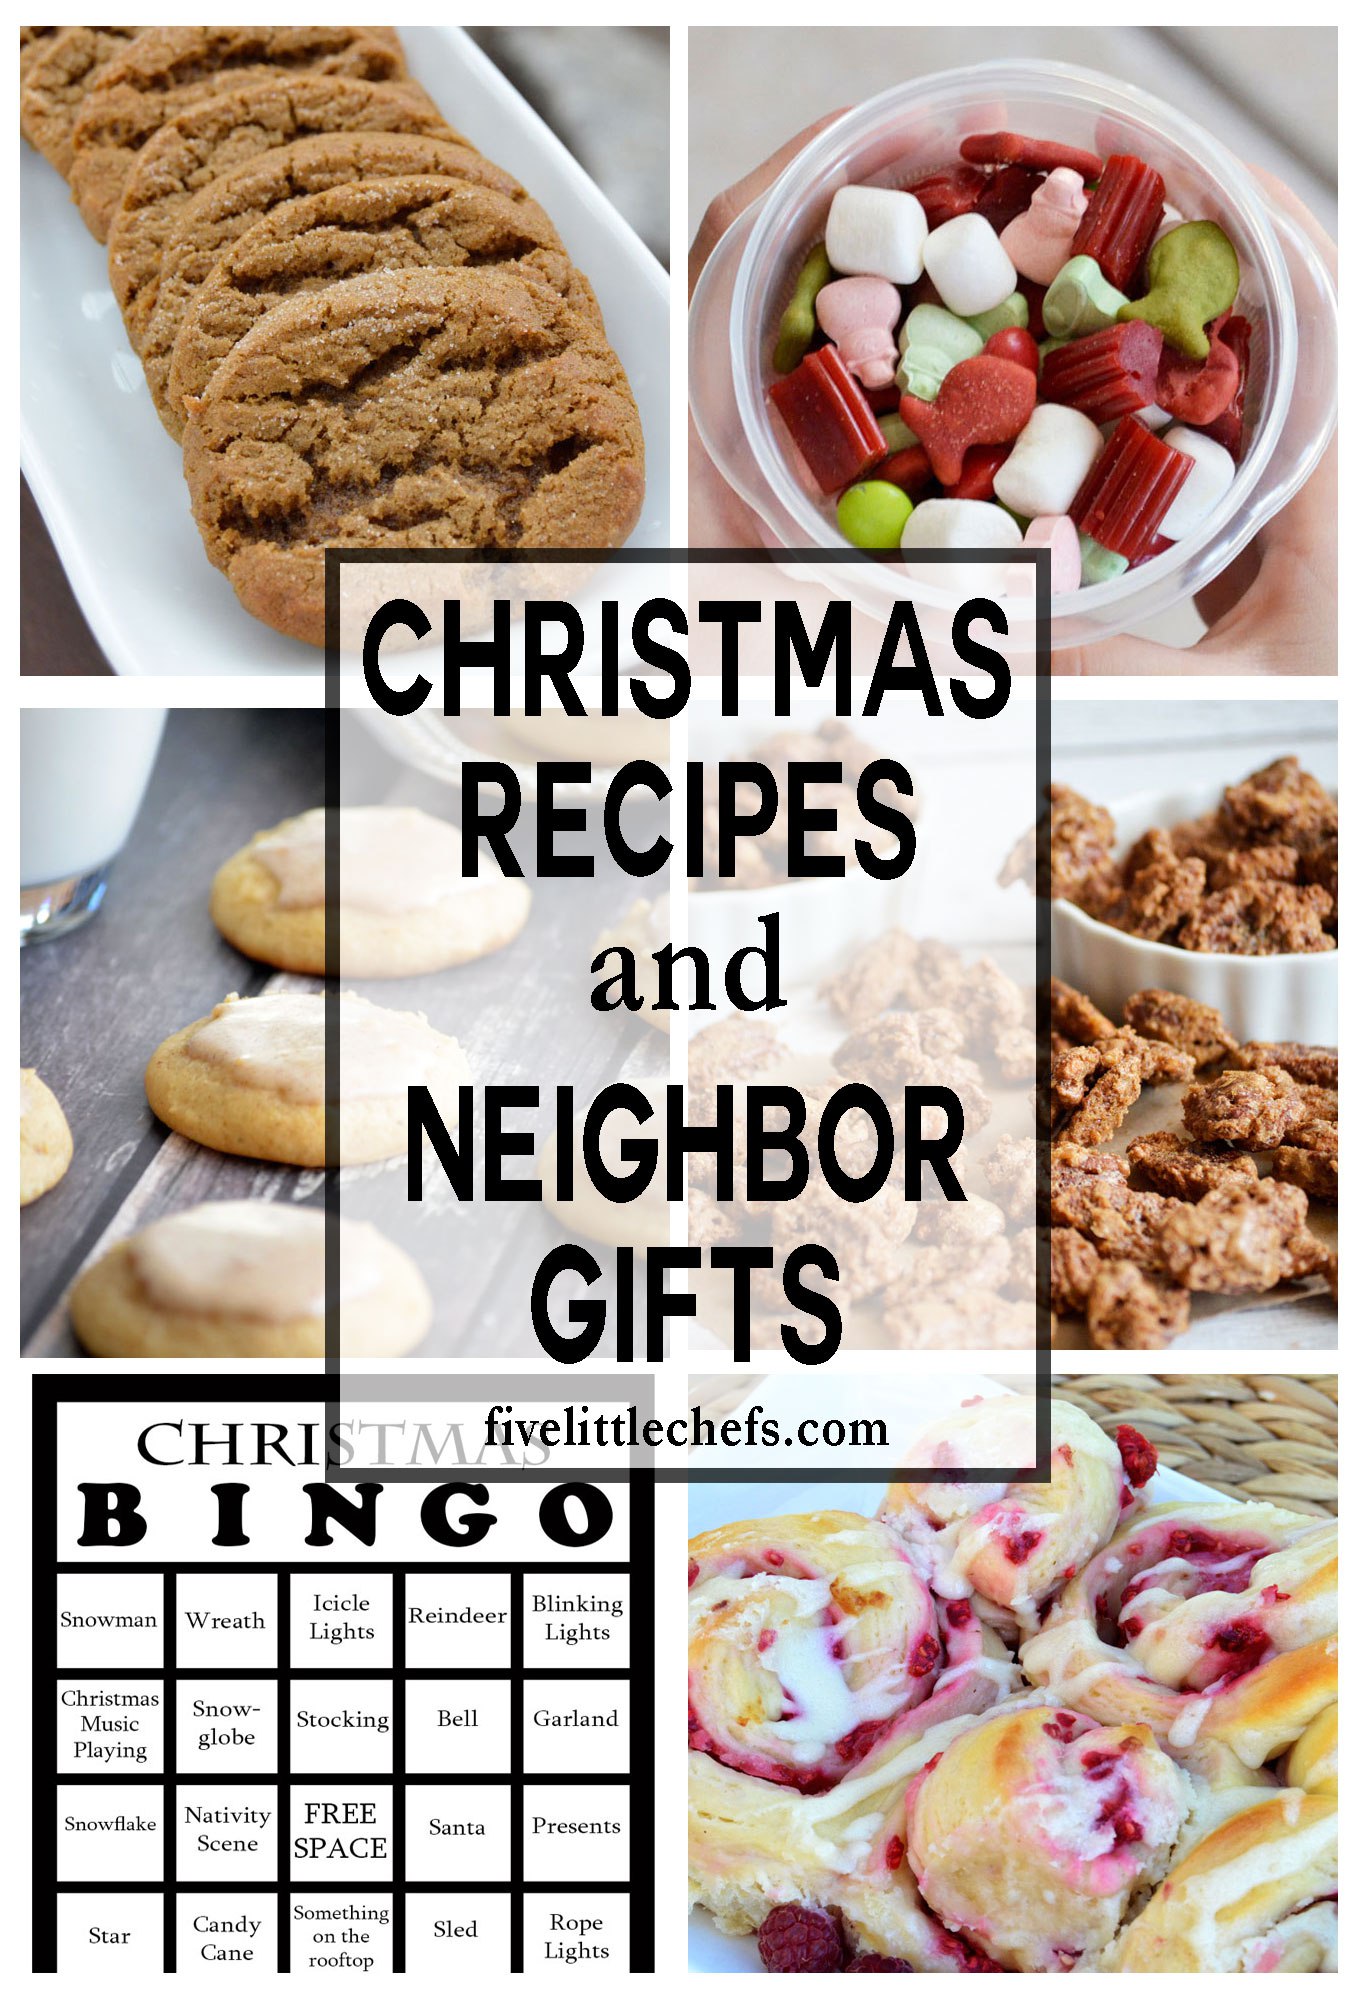 Christmas Recipes and Christmas Neighbor Gift Ideas